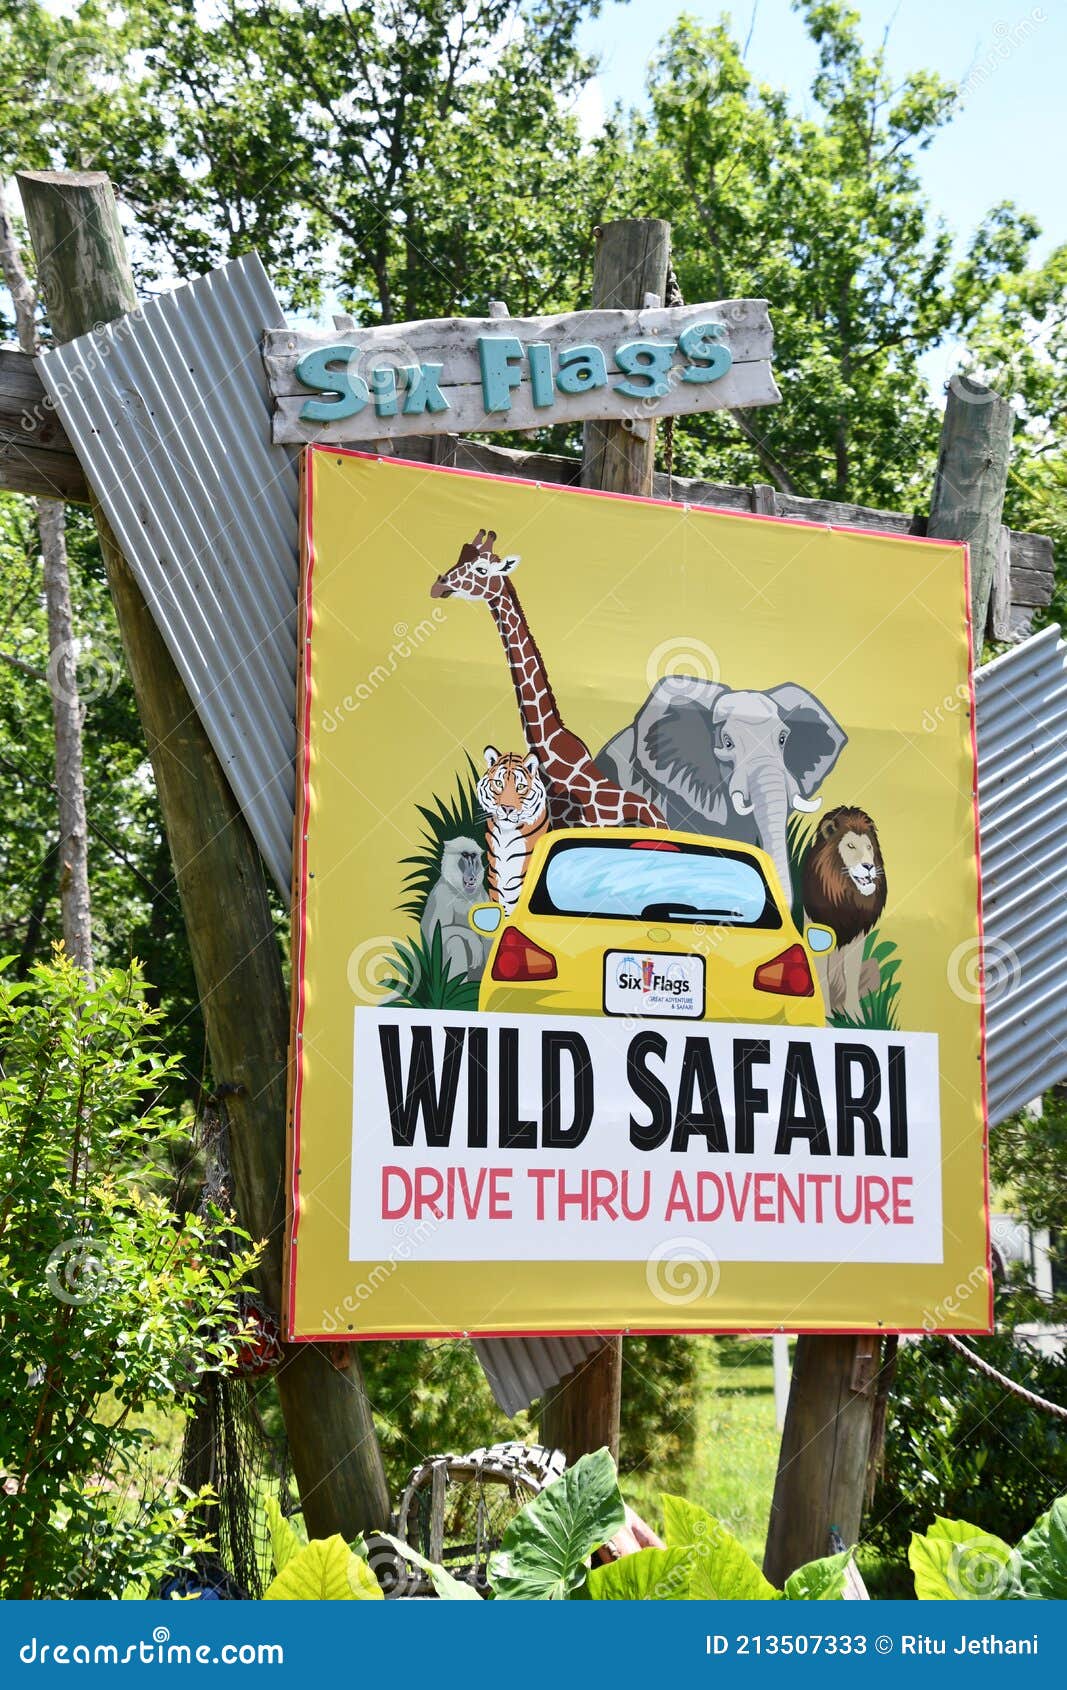 safari great adventure nj